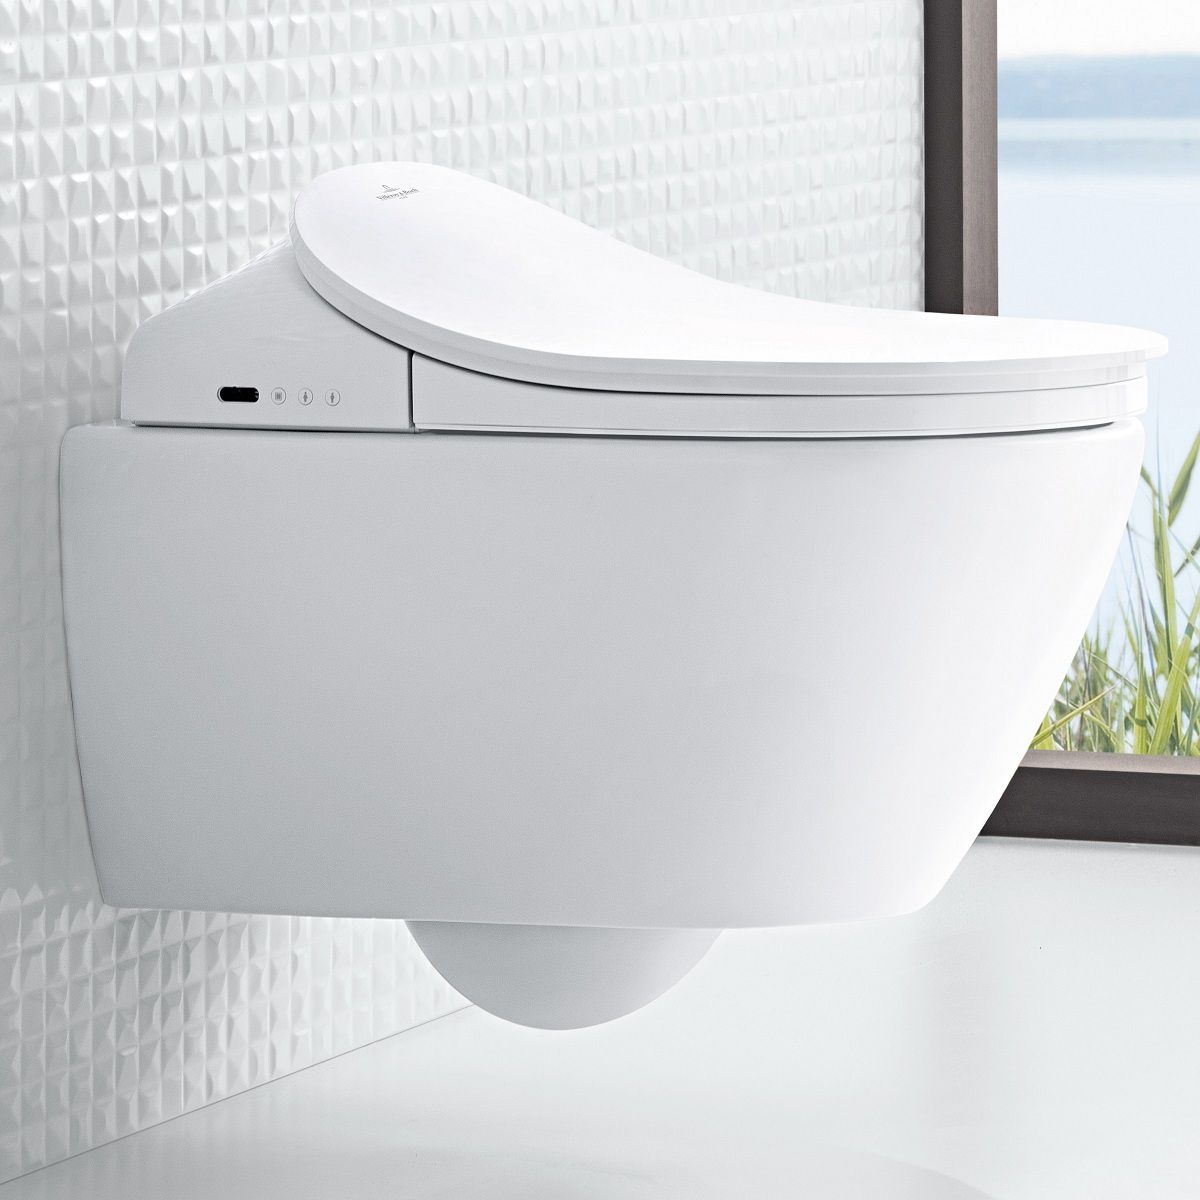 Villeroy & Boch ViClean L Shower Toilet & Bidet Seat